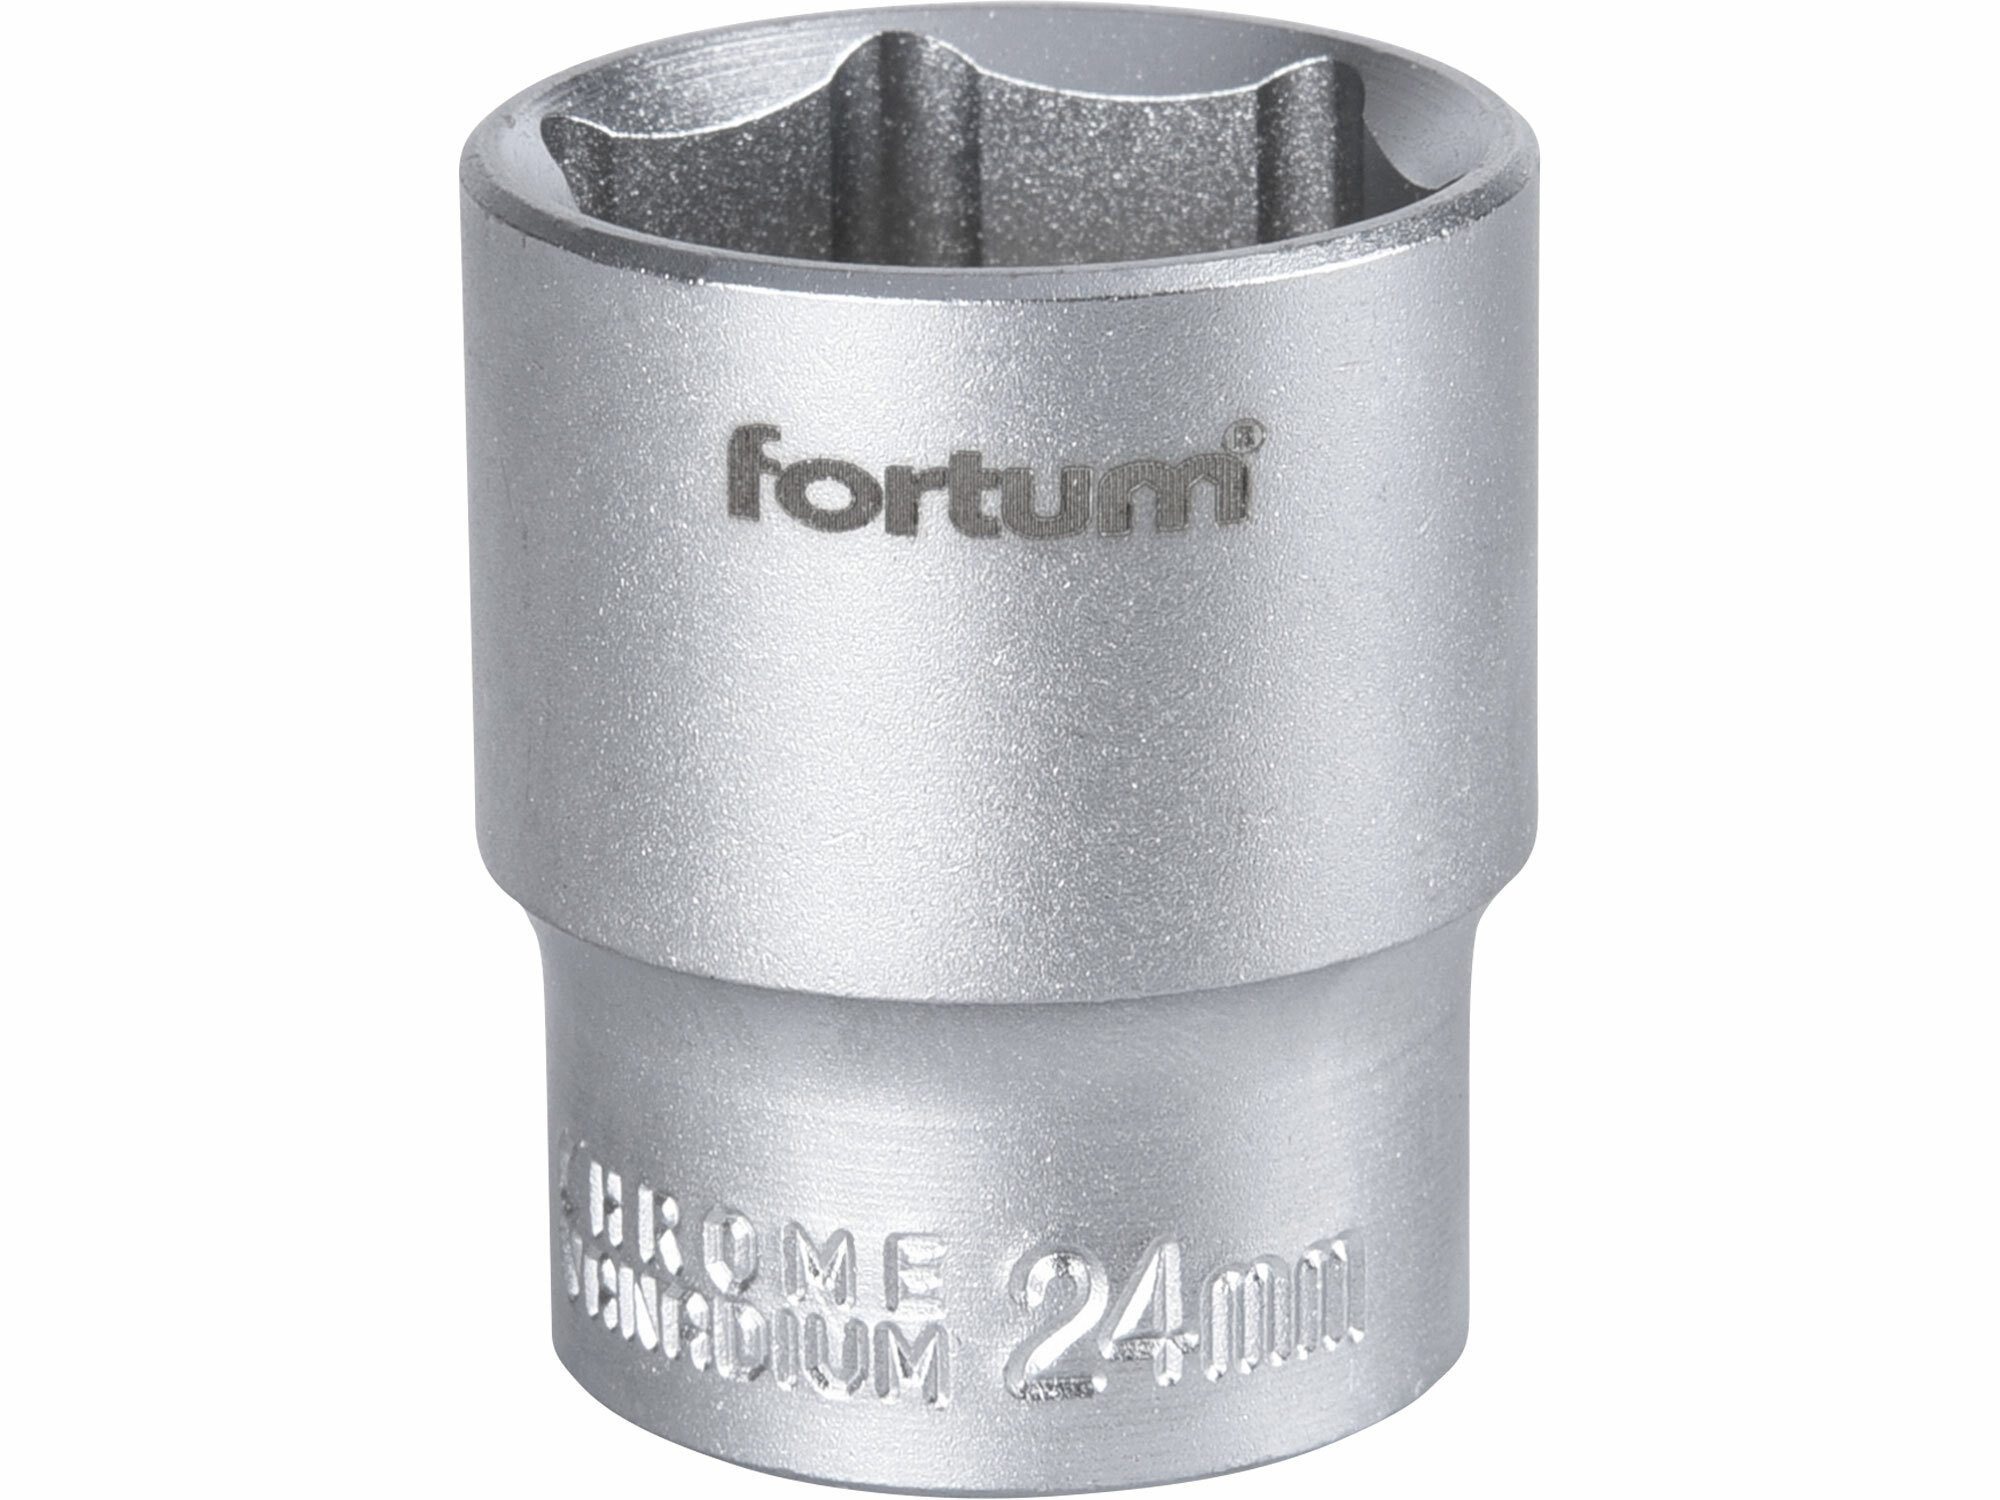 Hlavica nástrčná, 24mm, 1/2”, FORTUM